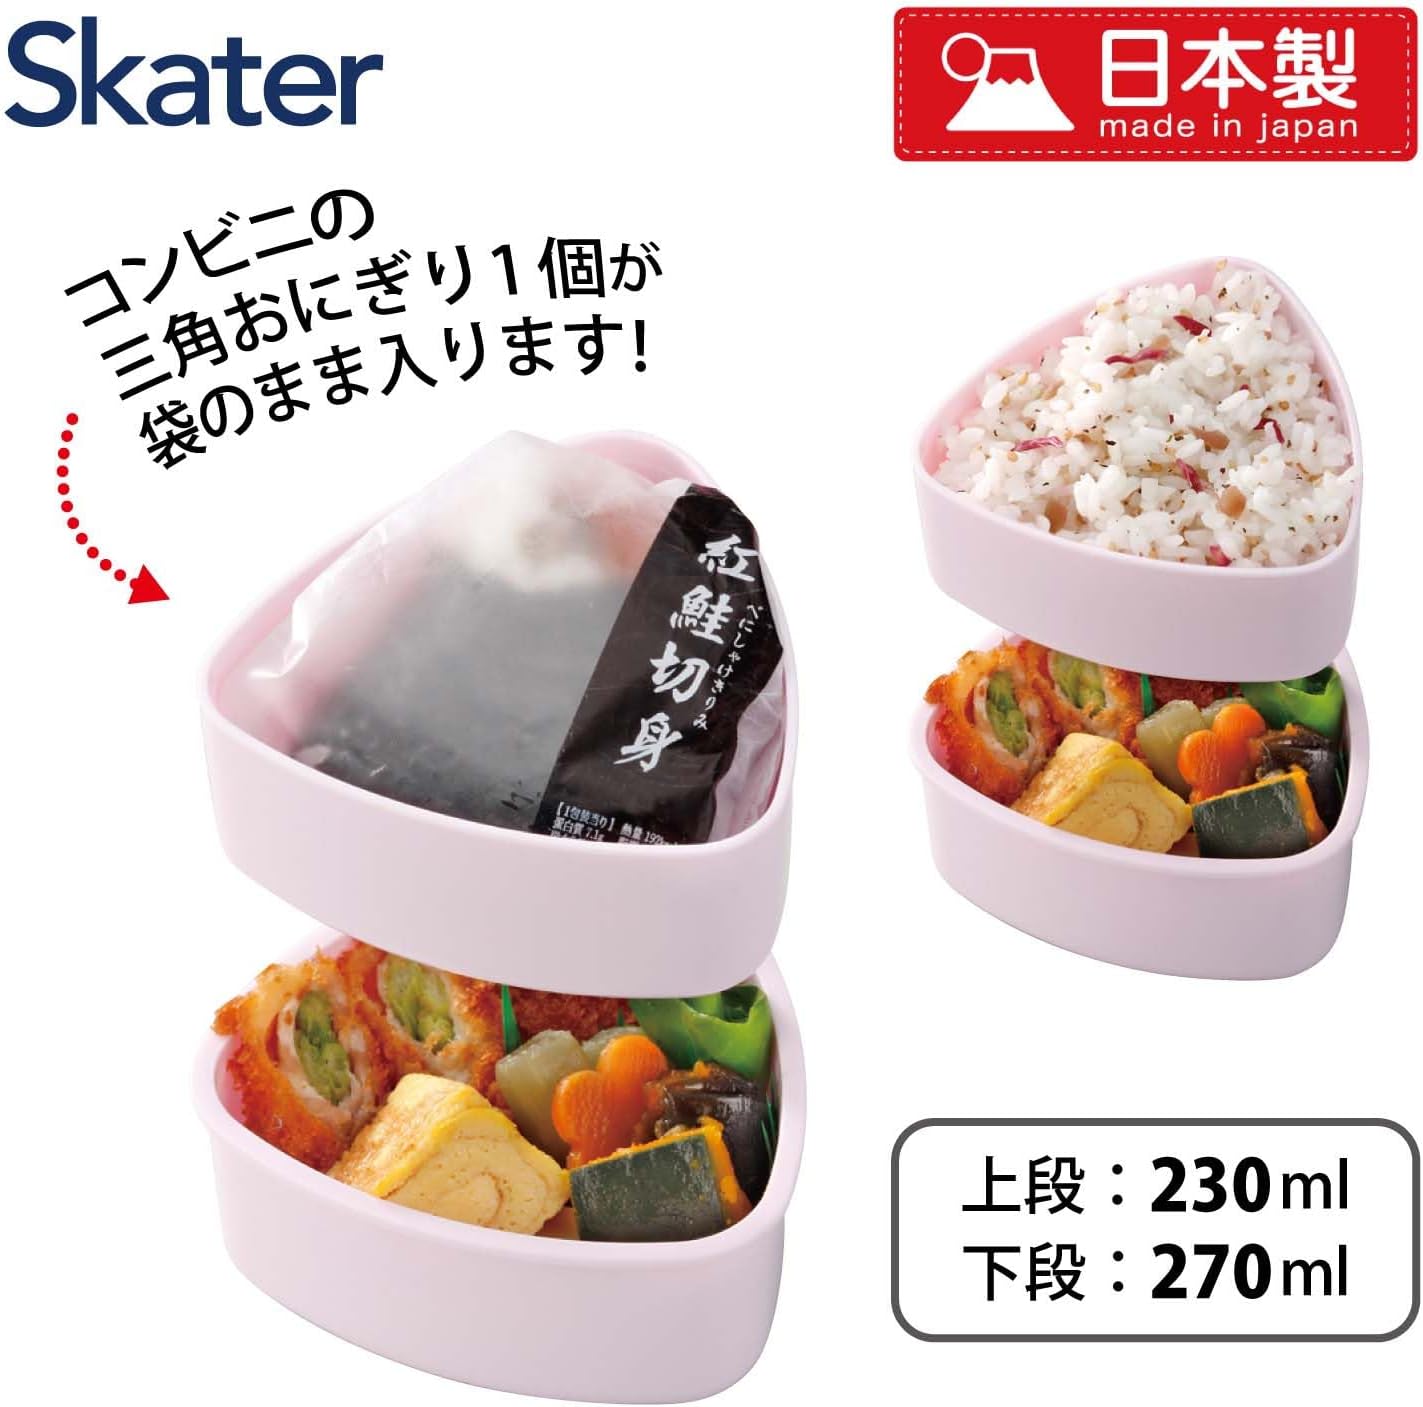 【Order】Sesame Street Triangular Onigiri Lunch Box